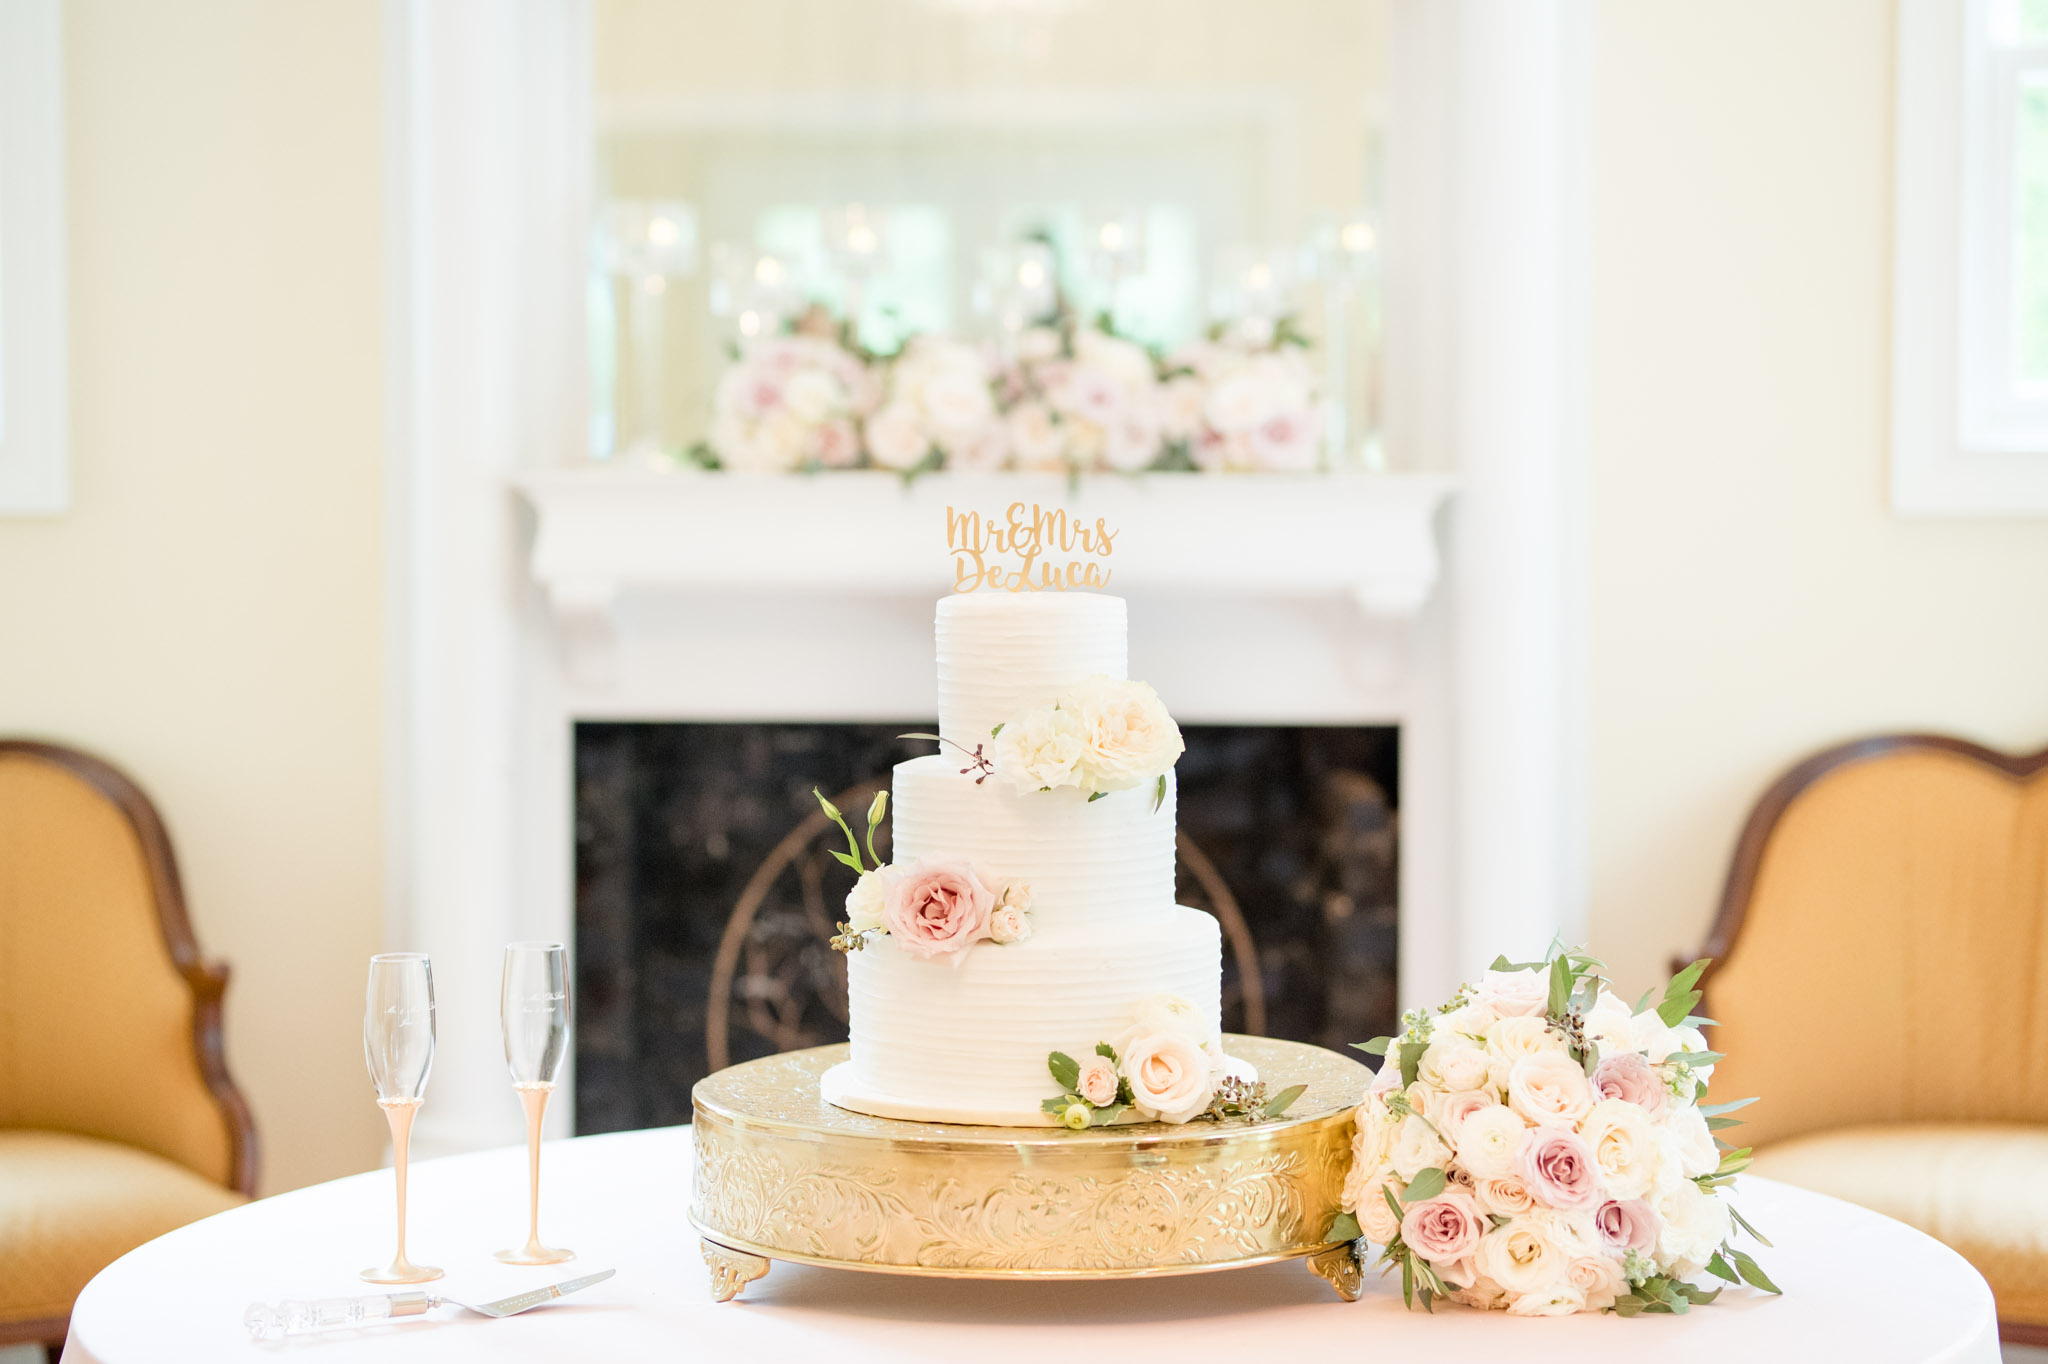 Wedding cake on display at reception.